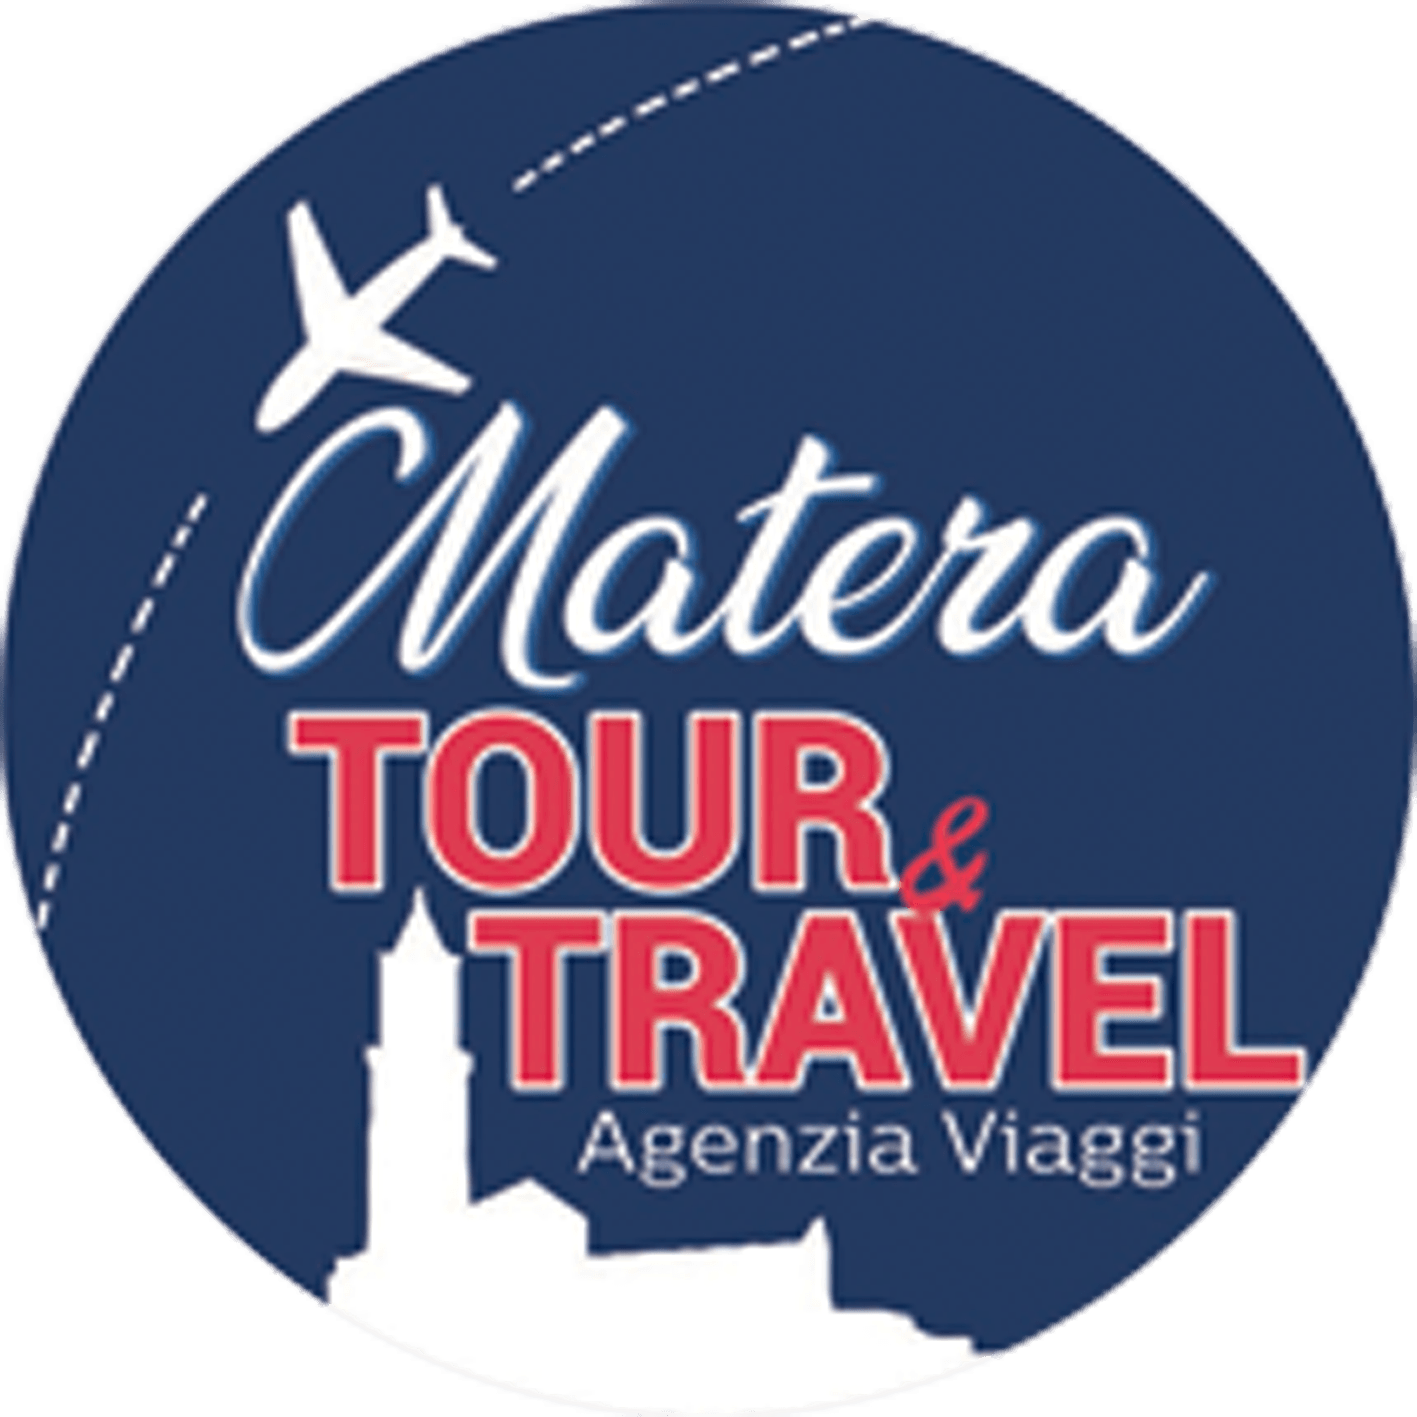 Matera Tour&Travel-LOGO